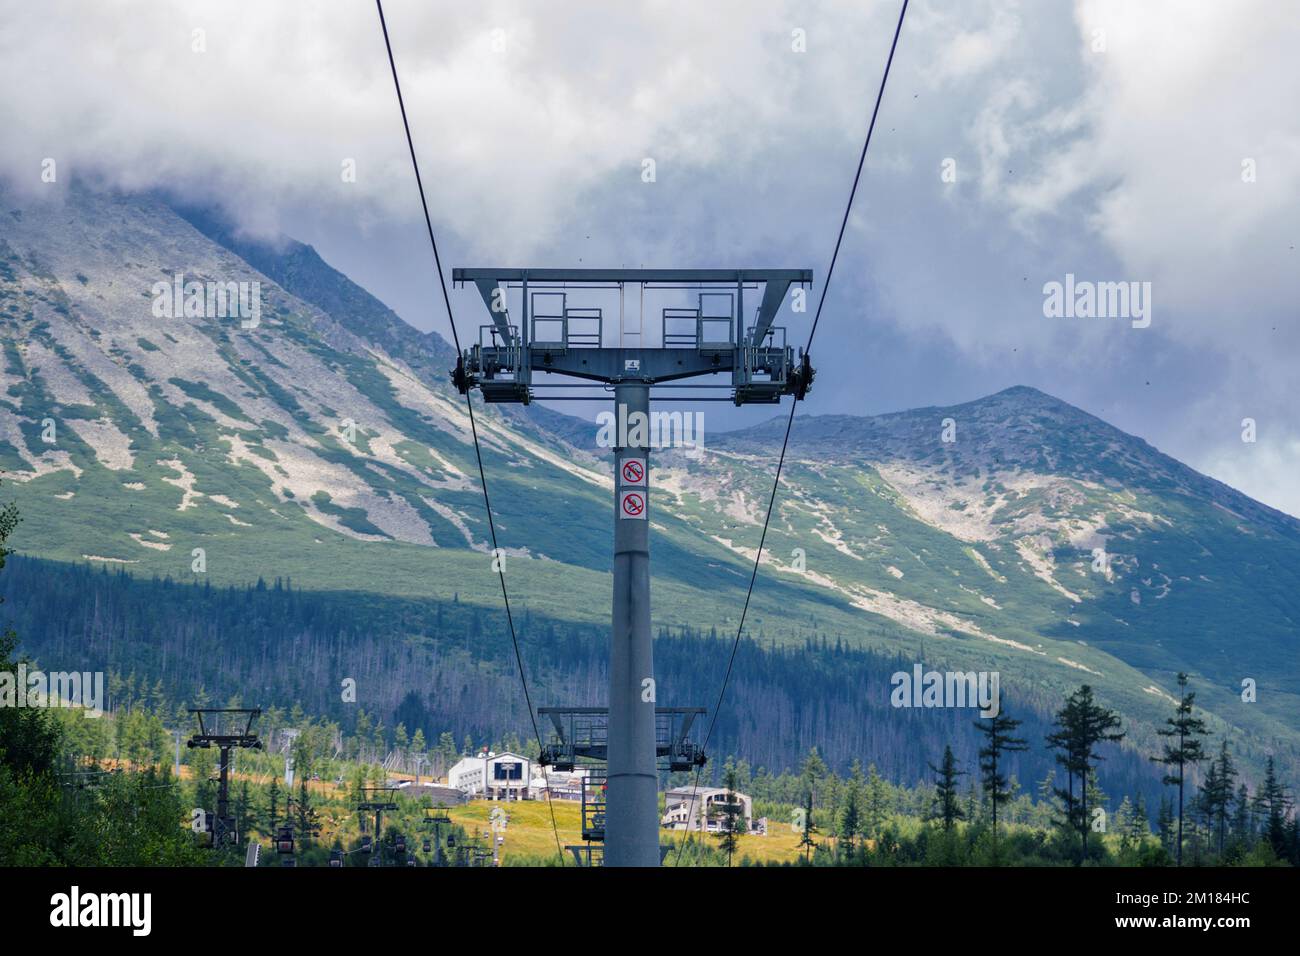 Tatranska Lomnica, Slowakei - 12. August 2021: Sommeransicht der Seilbahn im berühmten Skigebiet in der Hohen Tatra. Stockfoto